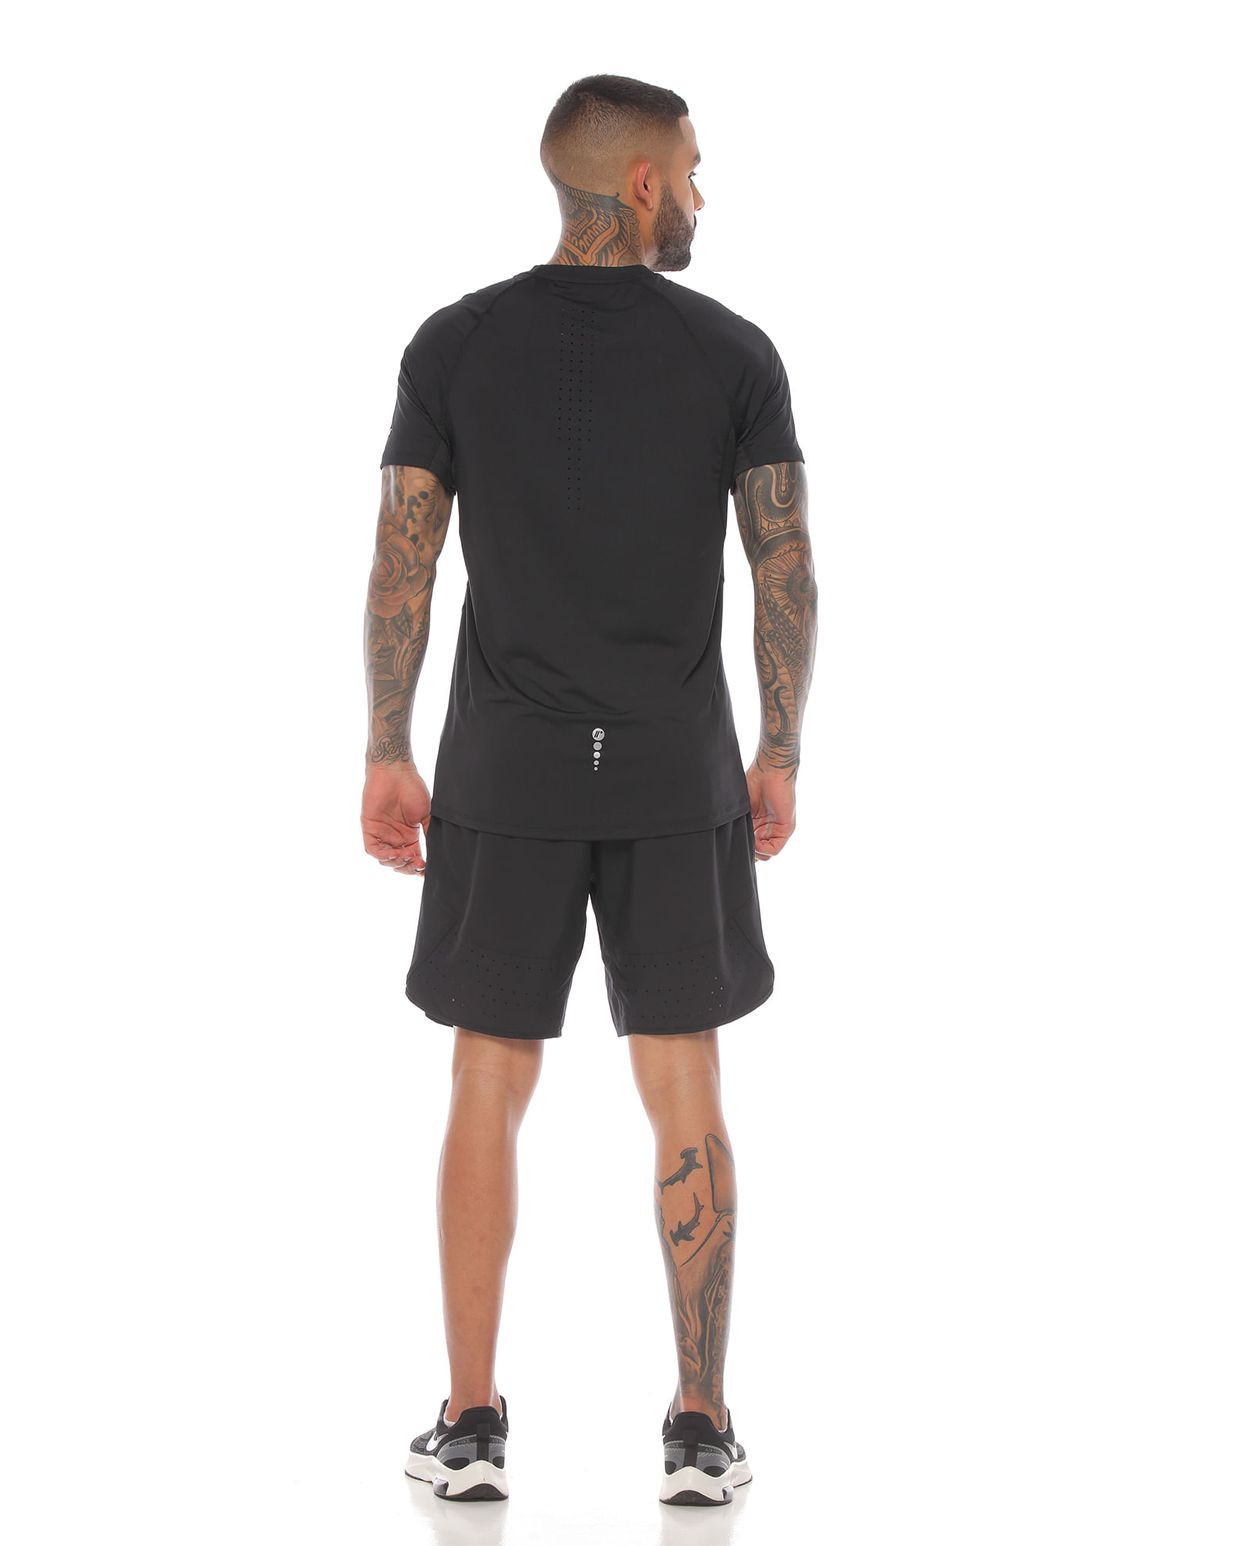 modelo con camiseta manga corta y pantaloneta deportiva color negro para hombre cuerpo completo parte trasera